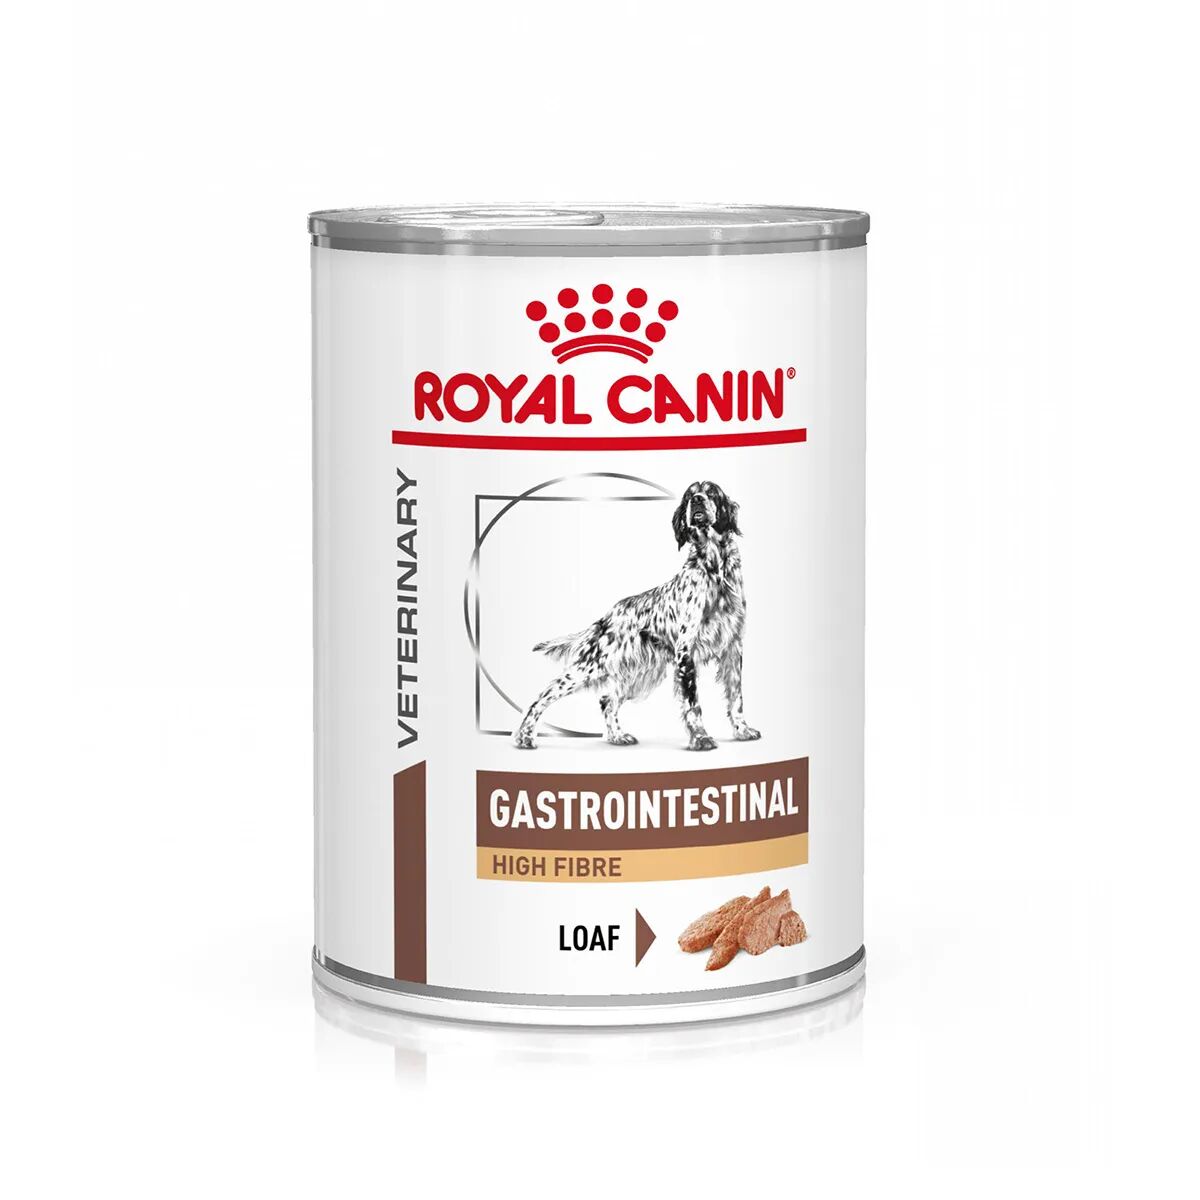 ROYAL CANIN V-Diet Gastrointestinal Higt Fiber Alimento dietetico completo per cani adulti 410G